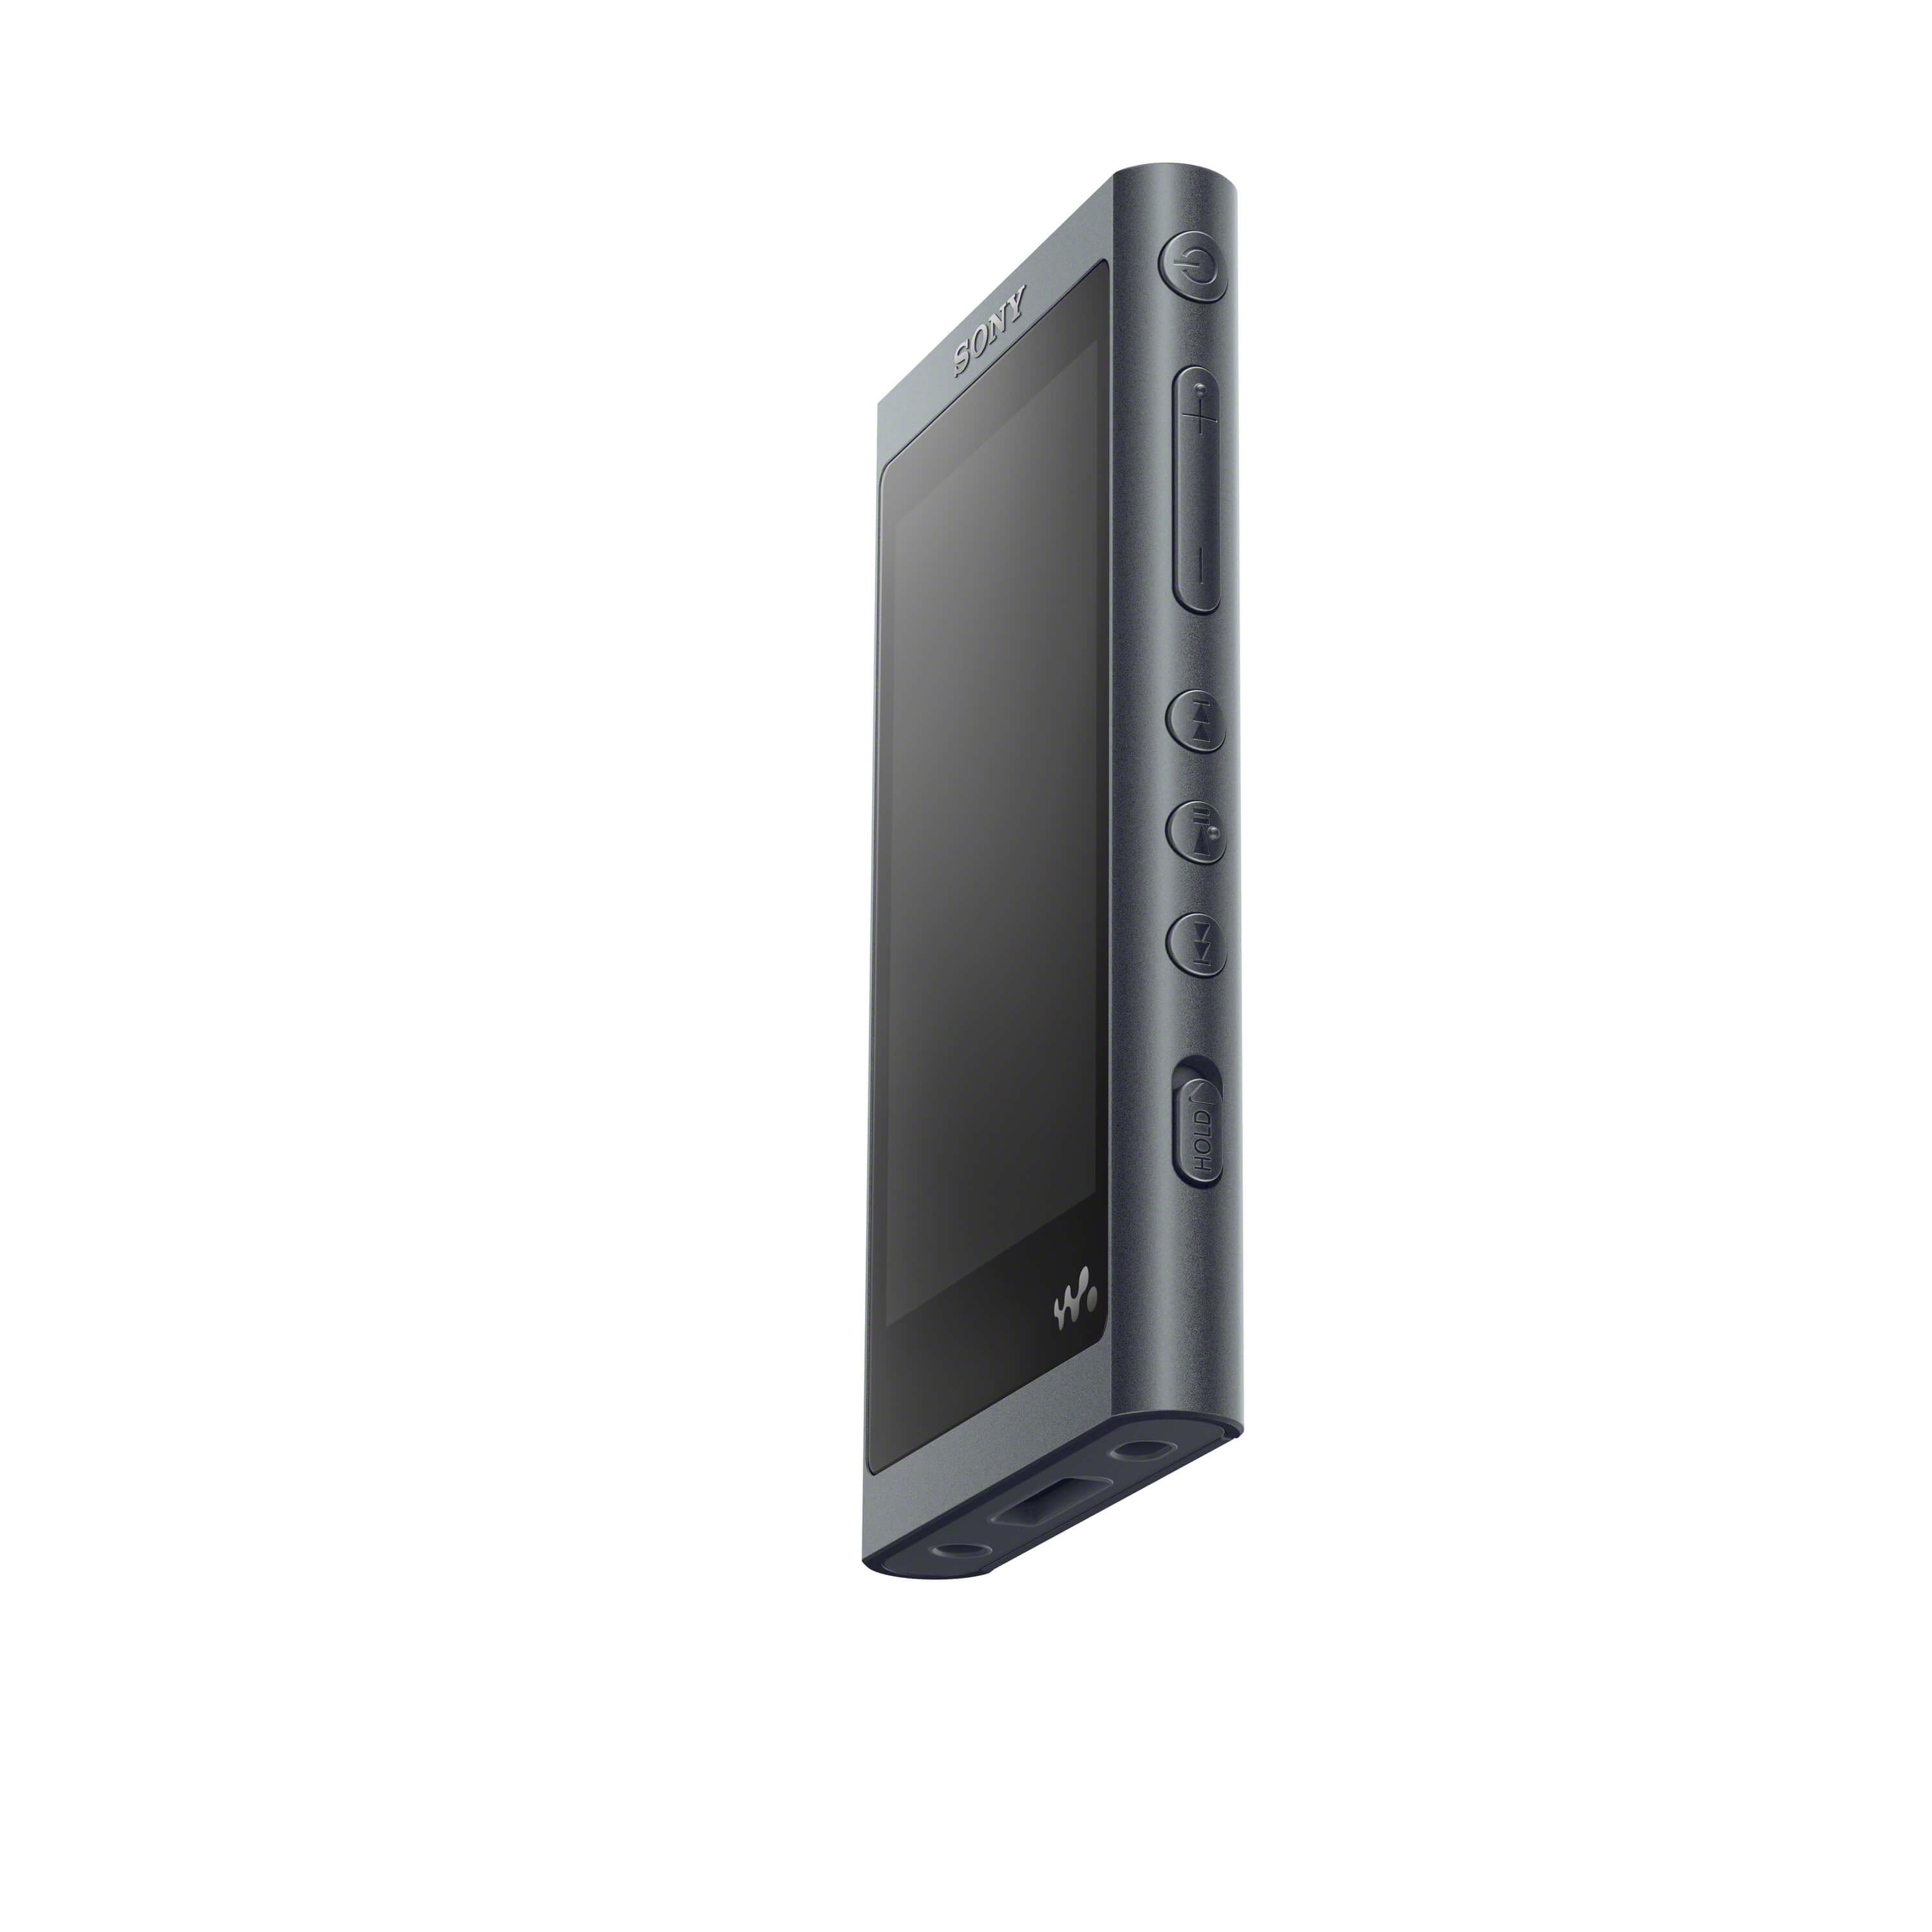 NW-A55 - 高解析音質Walkman(藍) - Sony 台灣官方購物網站- Sony Store